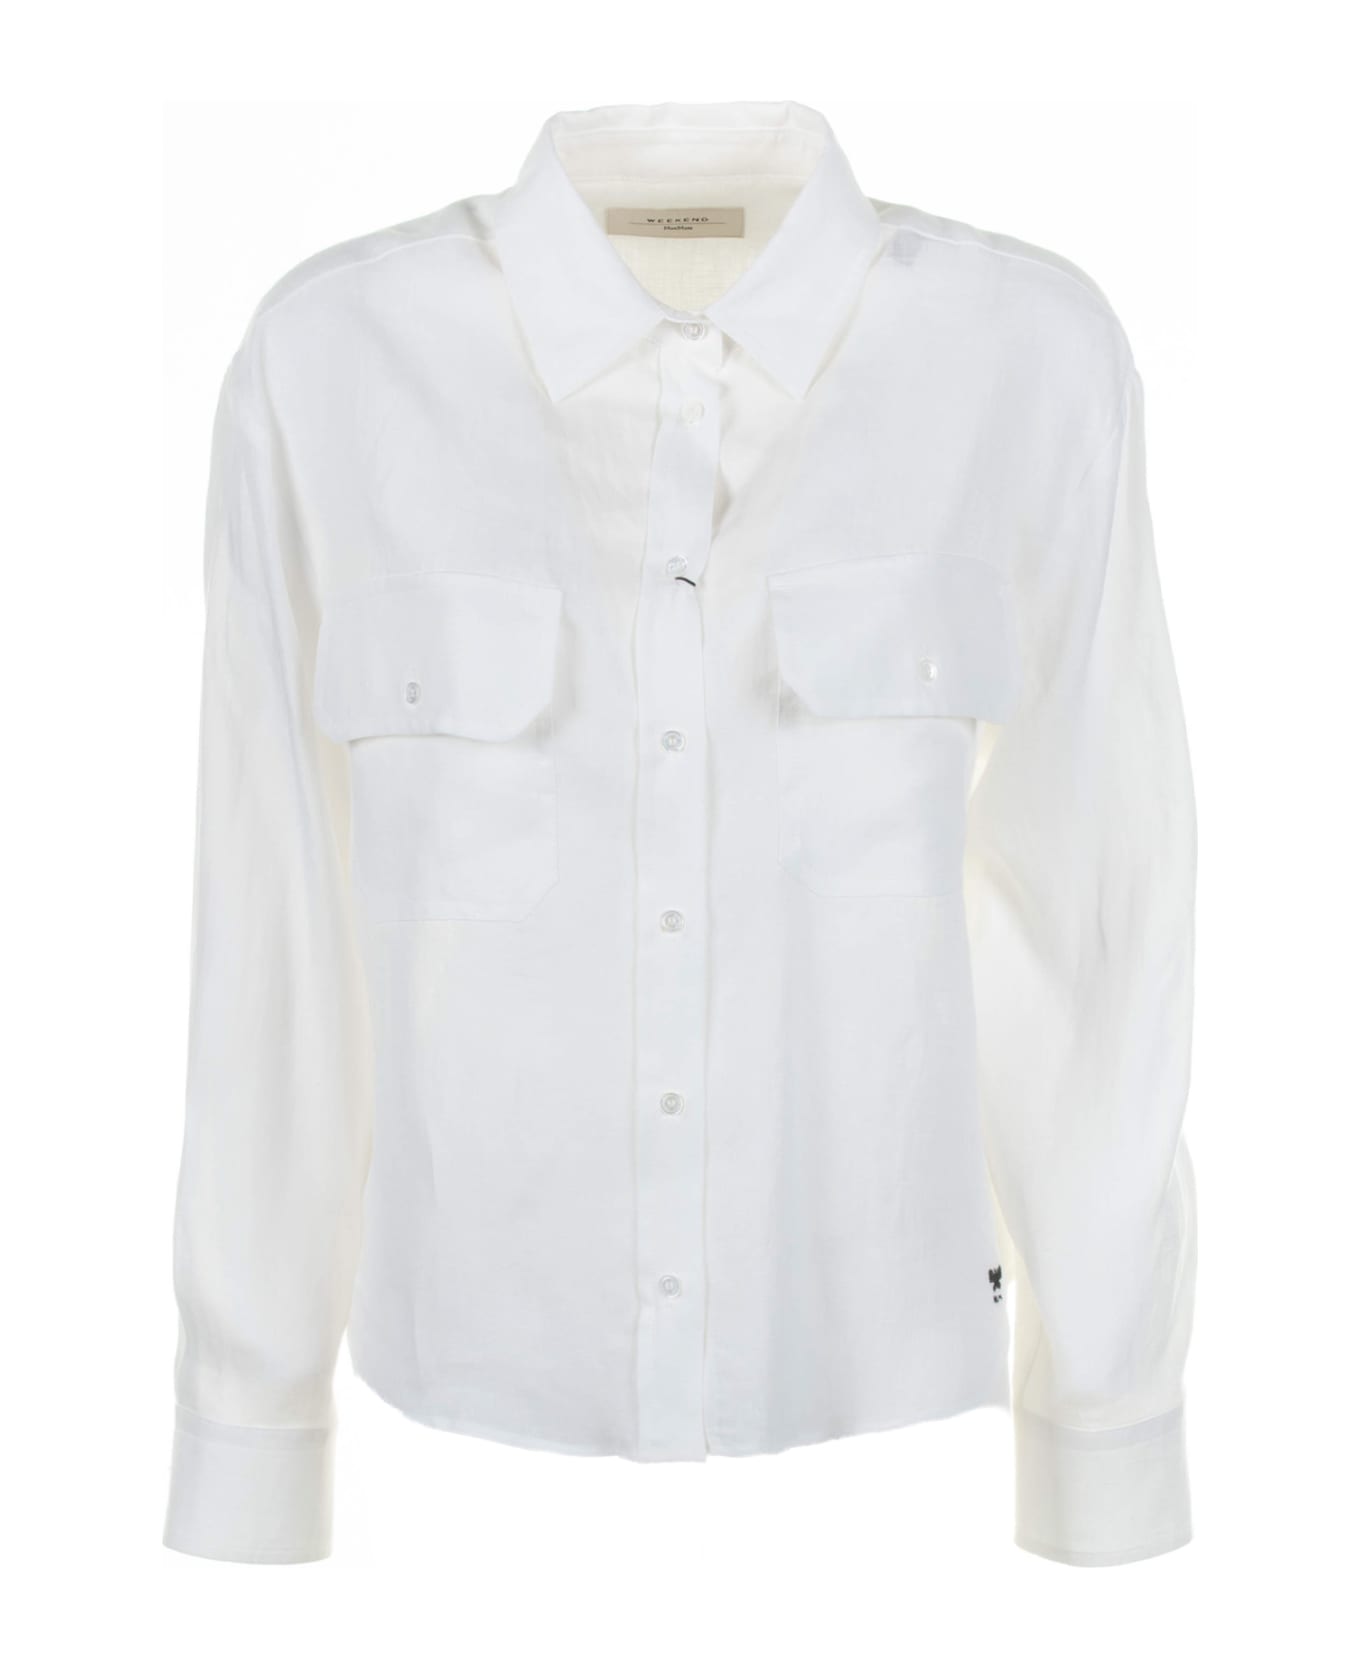 Weekend Max Mara White Linen Shirt - BIANCO シャツ